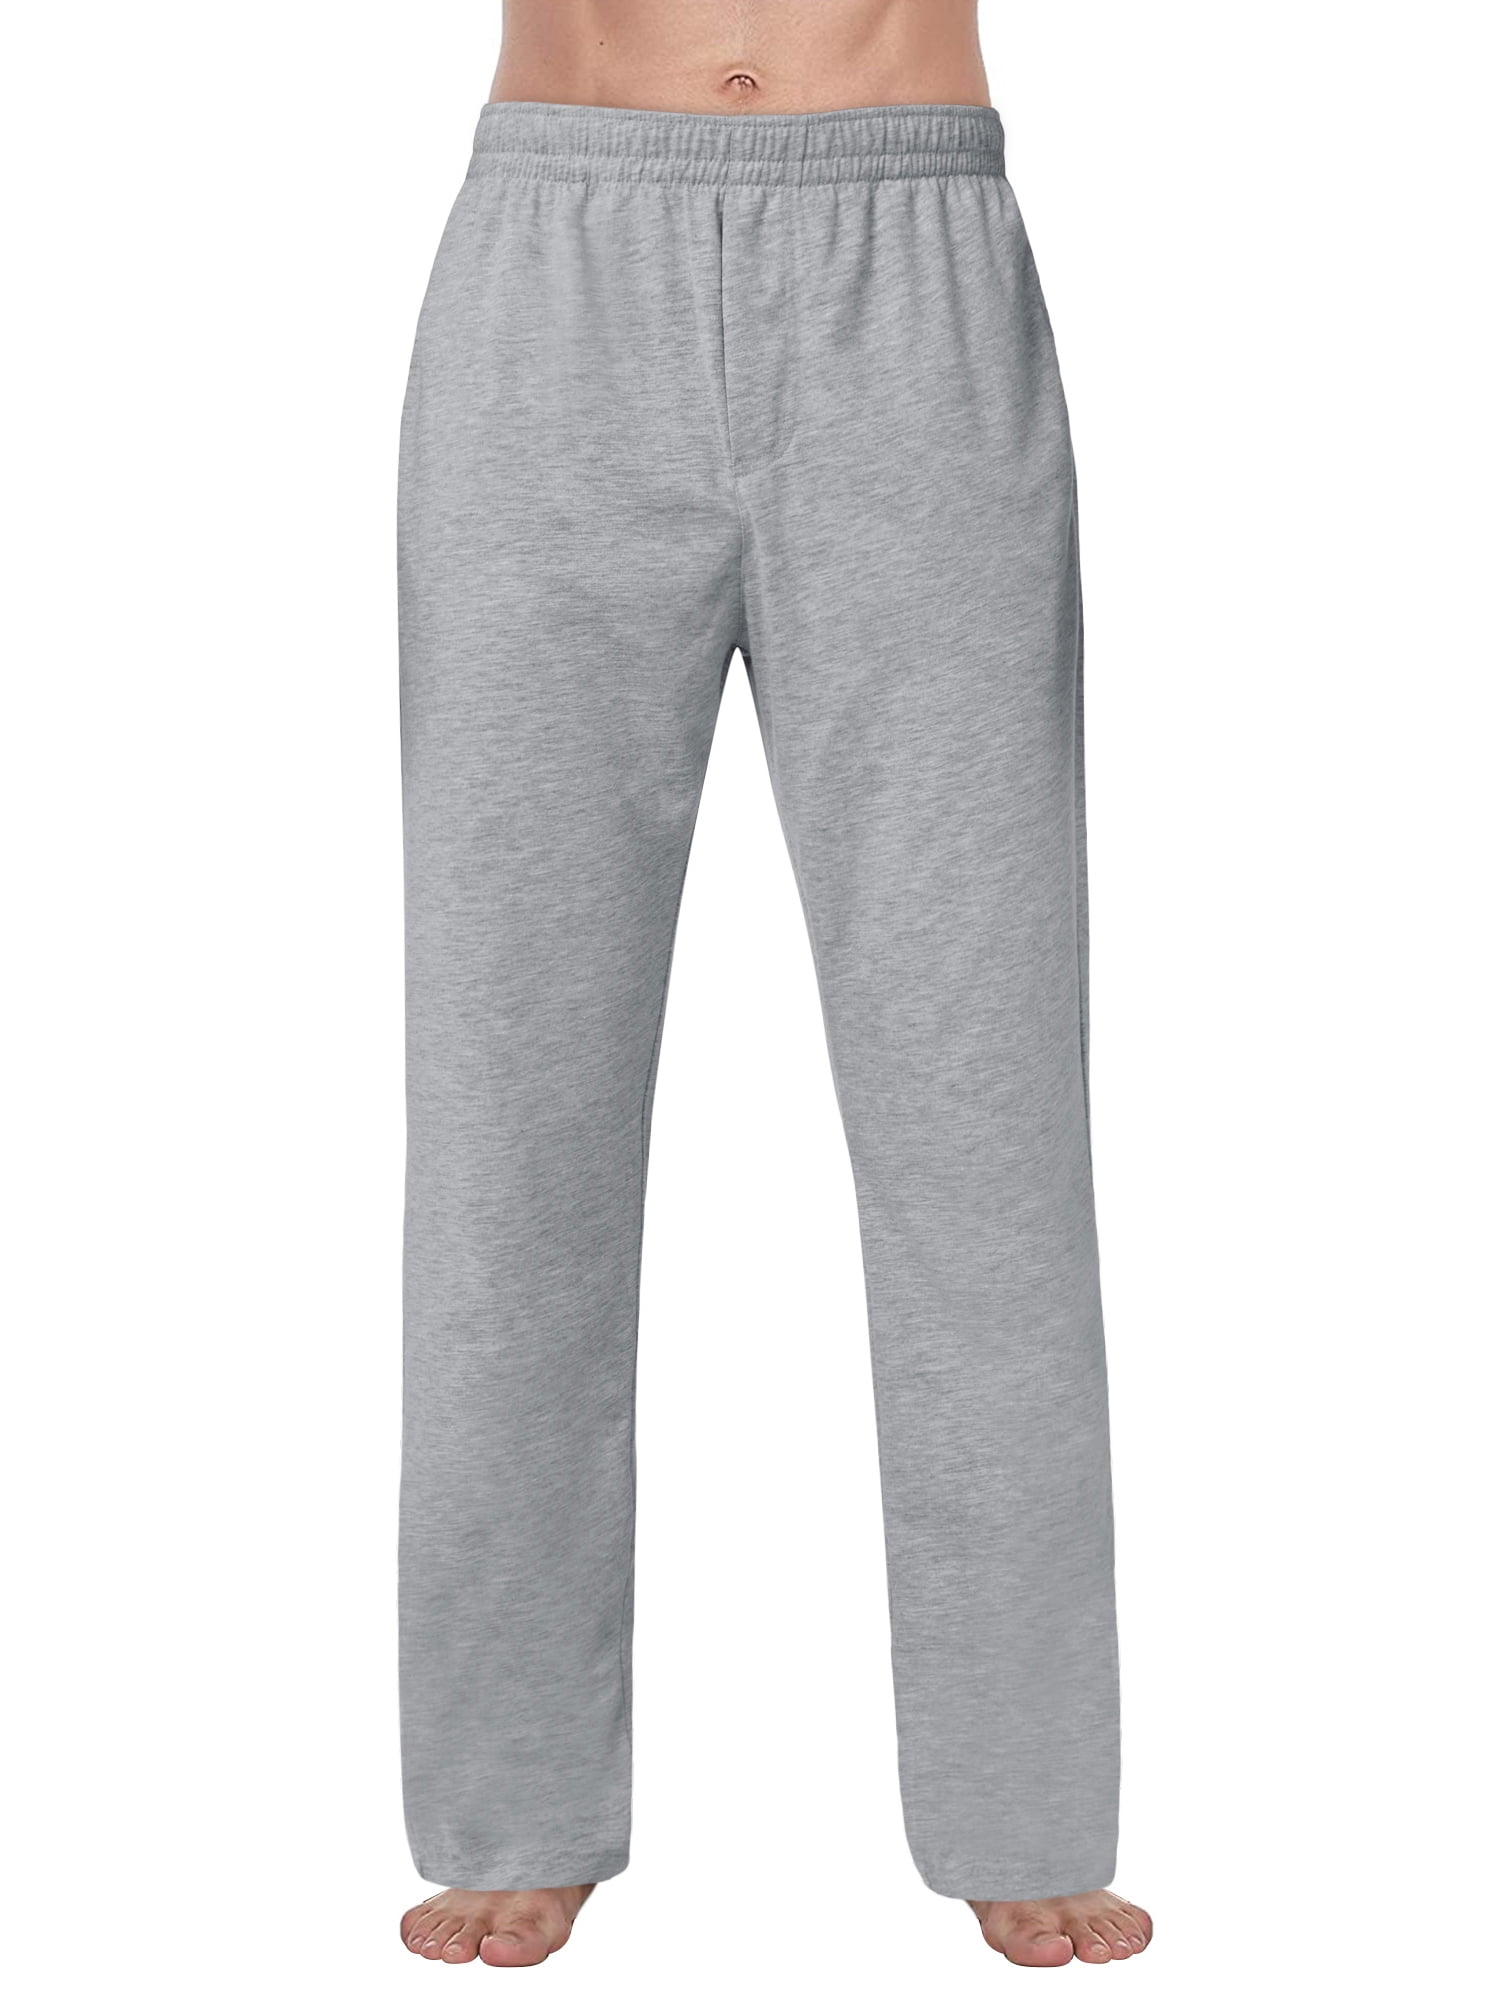 Men's Pajama Pants Pockets Cotton PJ Pajama Bottoms Sleepwear Homewear ...